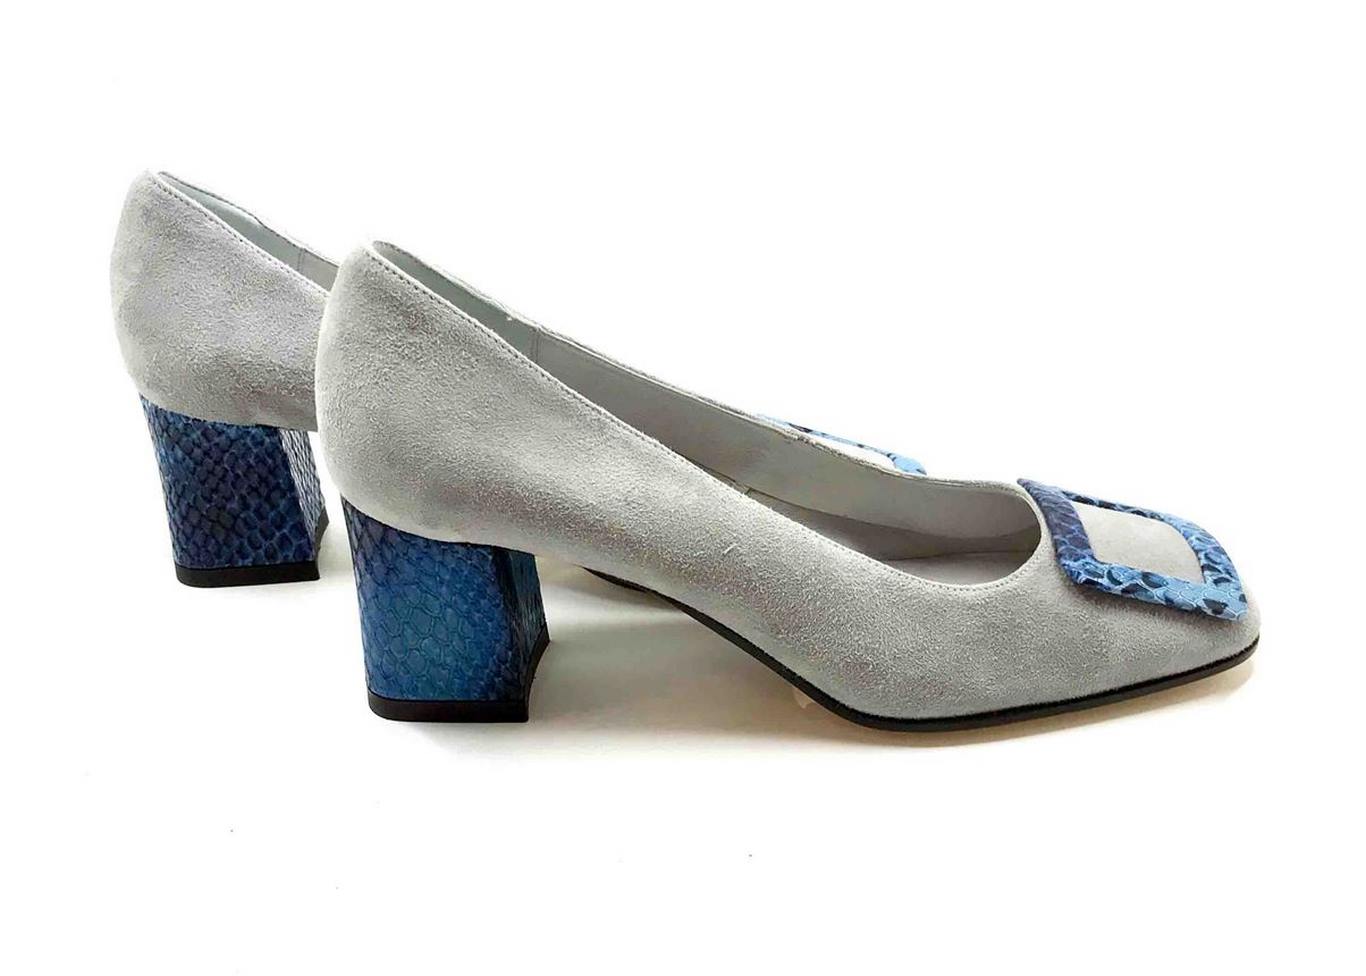 Décolleté Heel 5cm upper in Grey Suede, heel and buckle in printed Blue Phyton